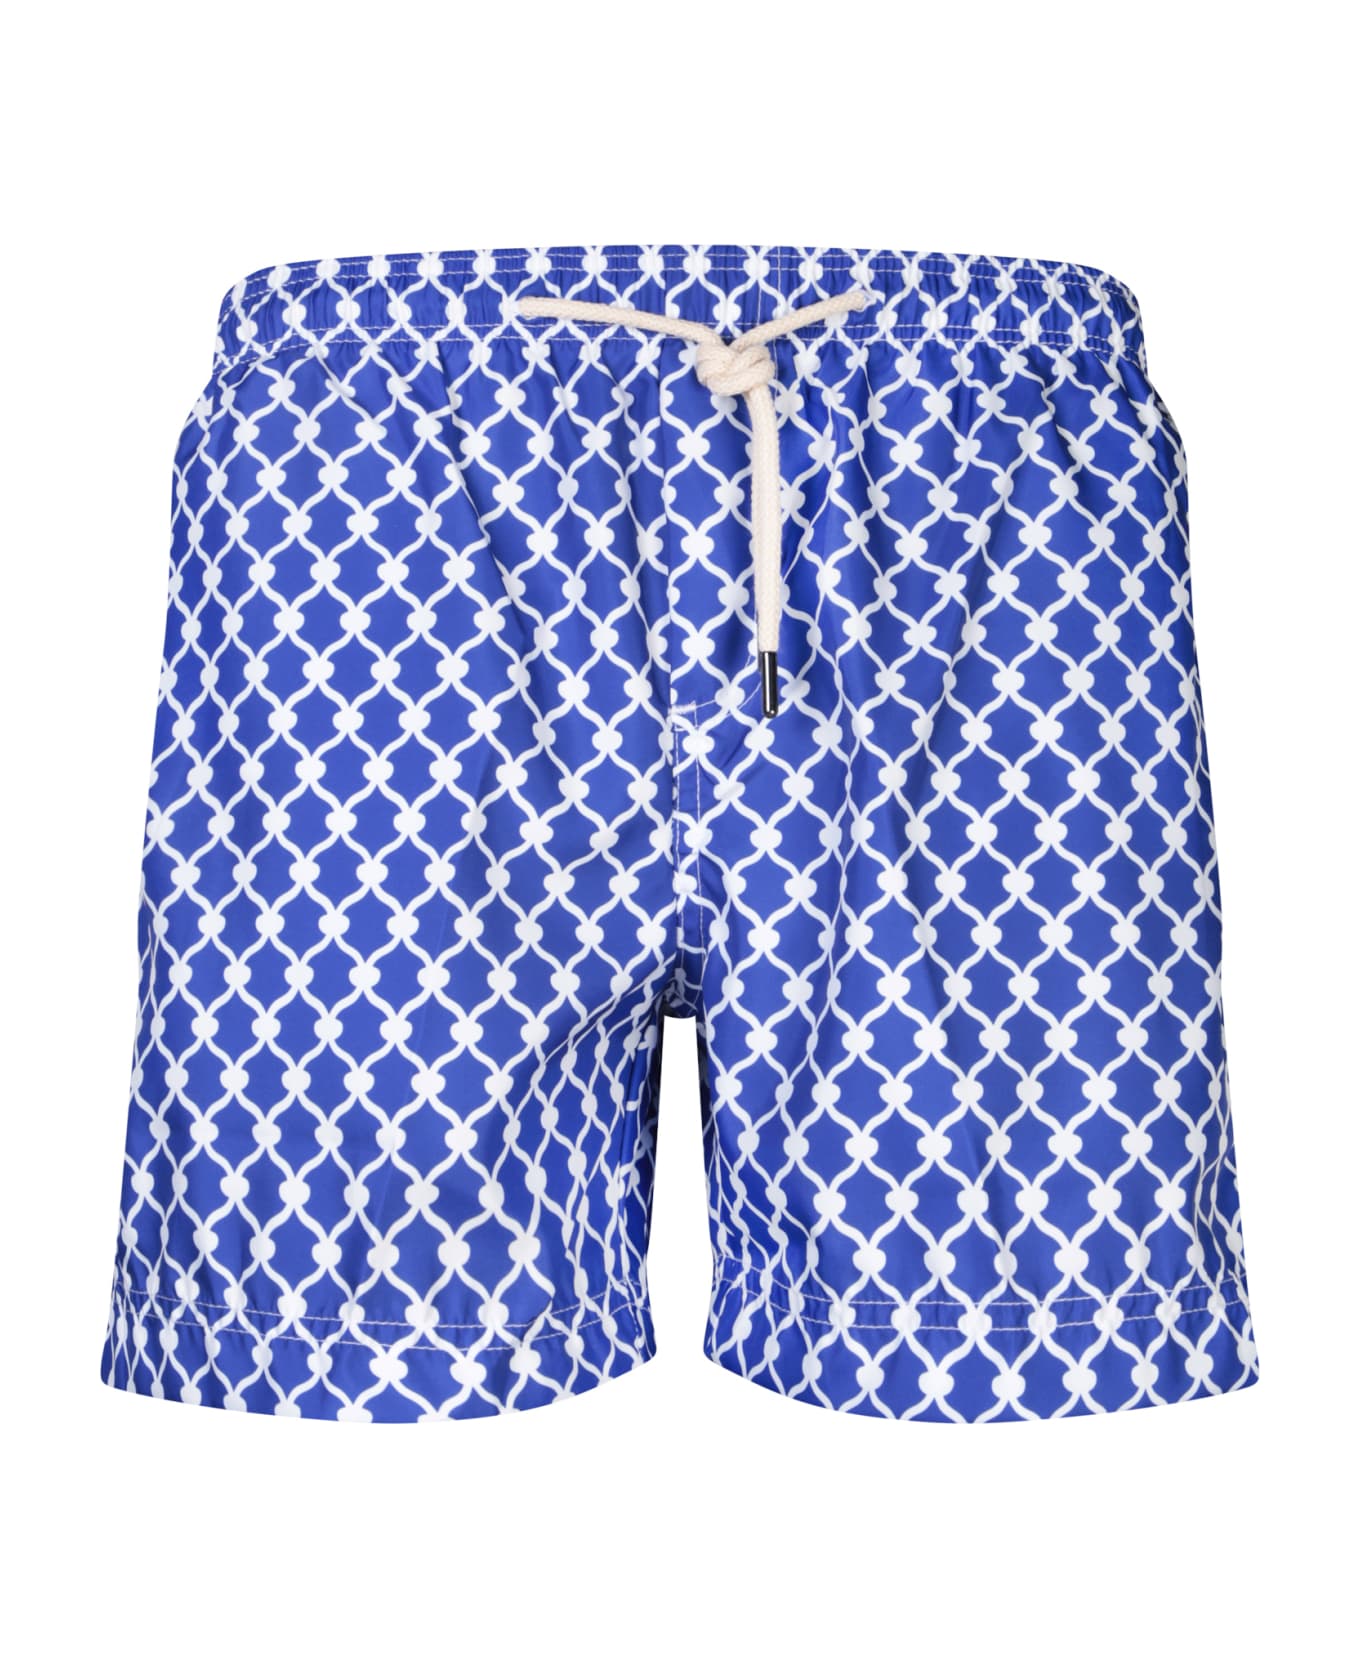 Peninsula Swimwear Patterned Blue/white Boxer Swim Shorts - White 水着